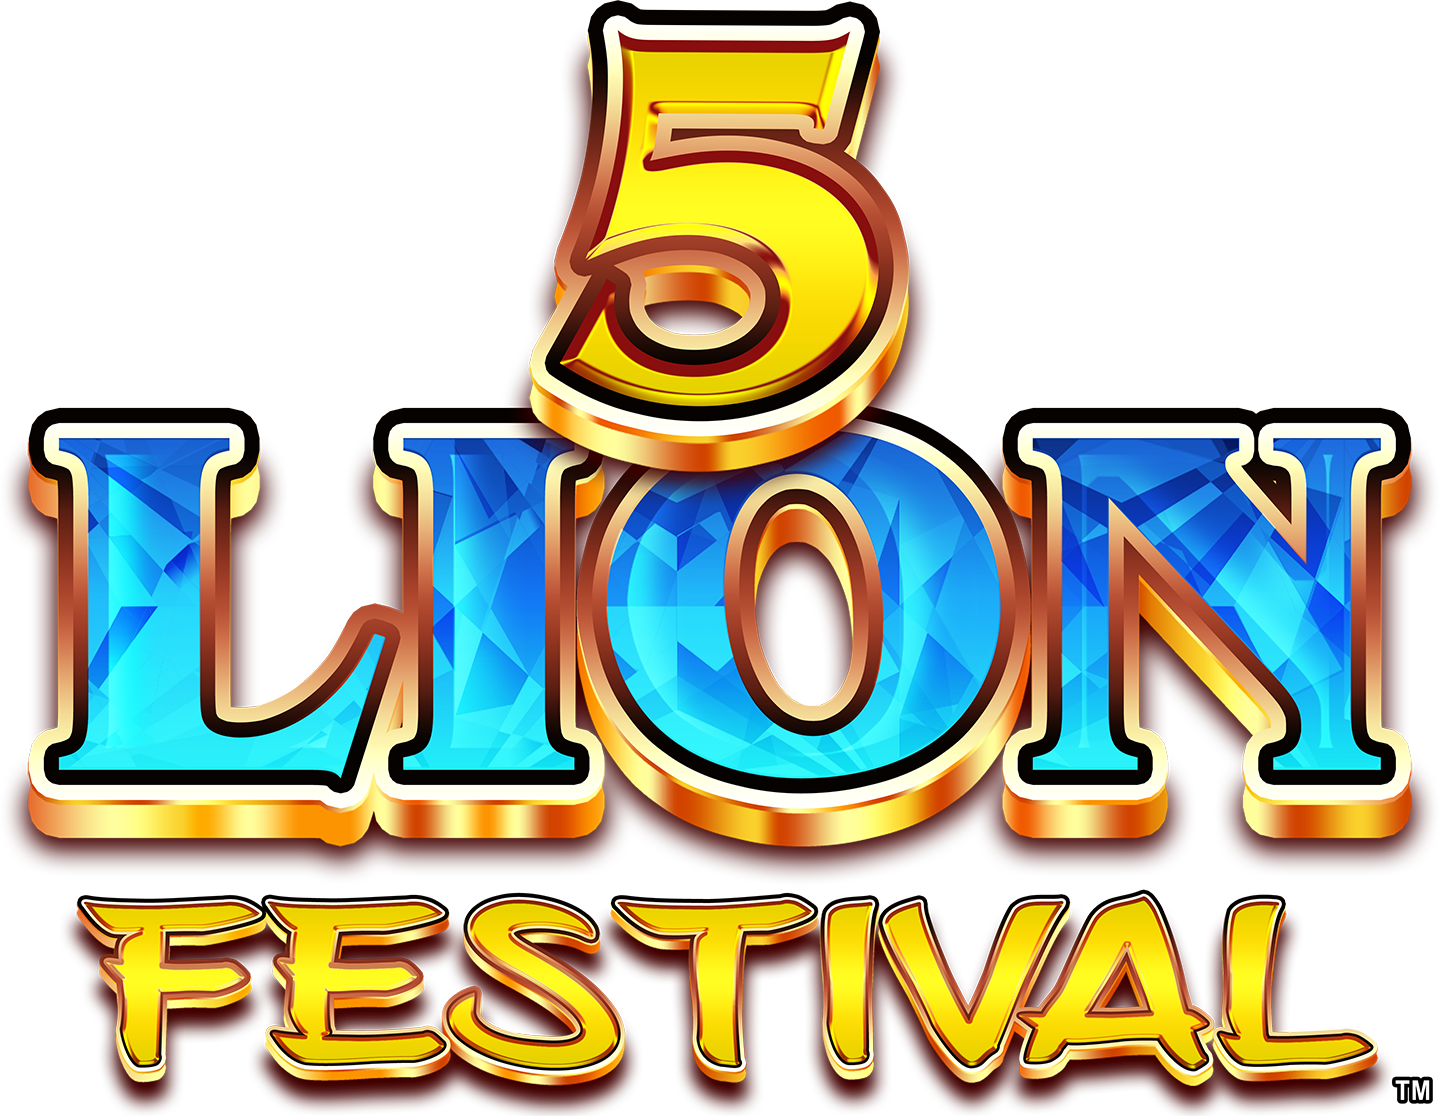 5 Lion Festival Logo